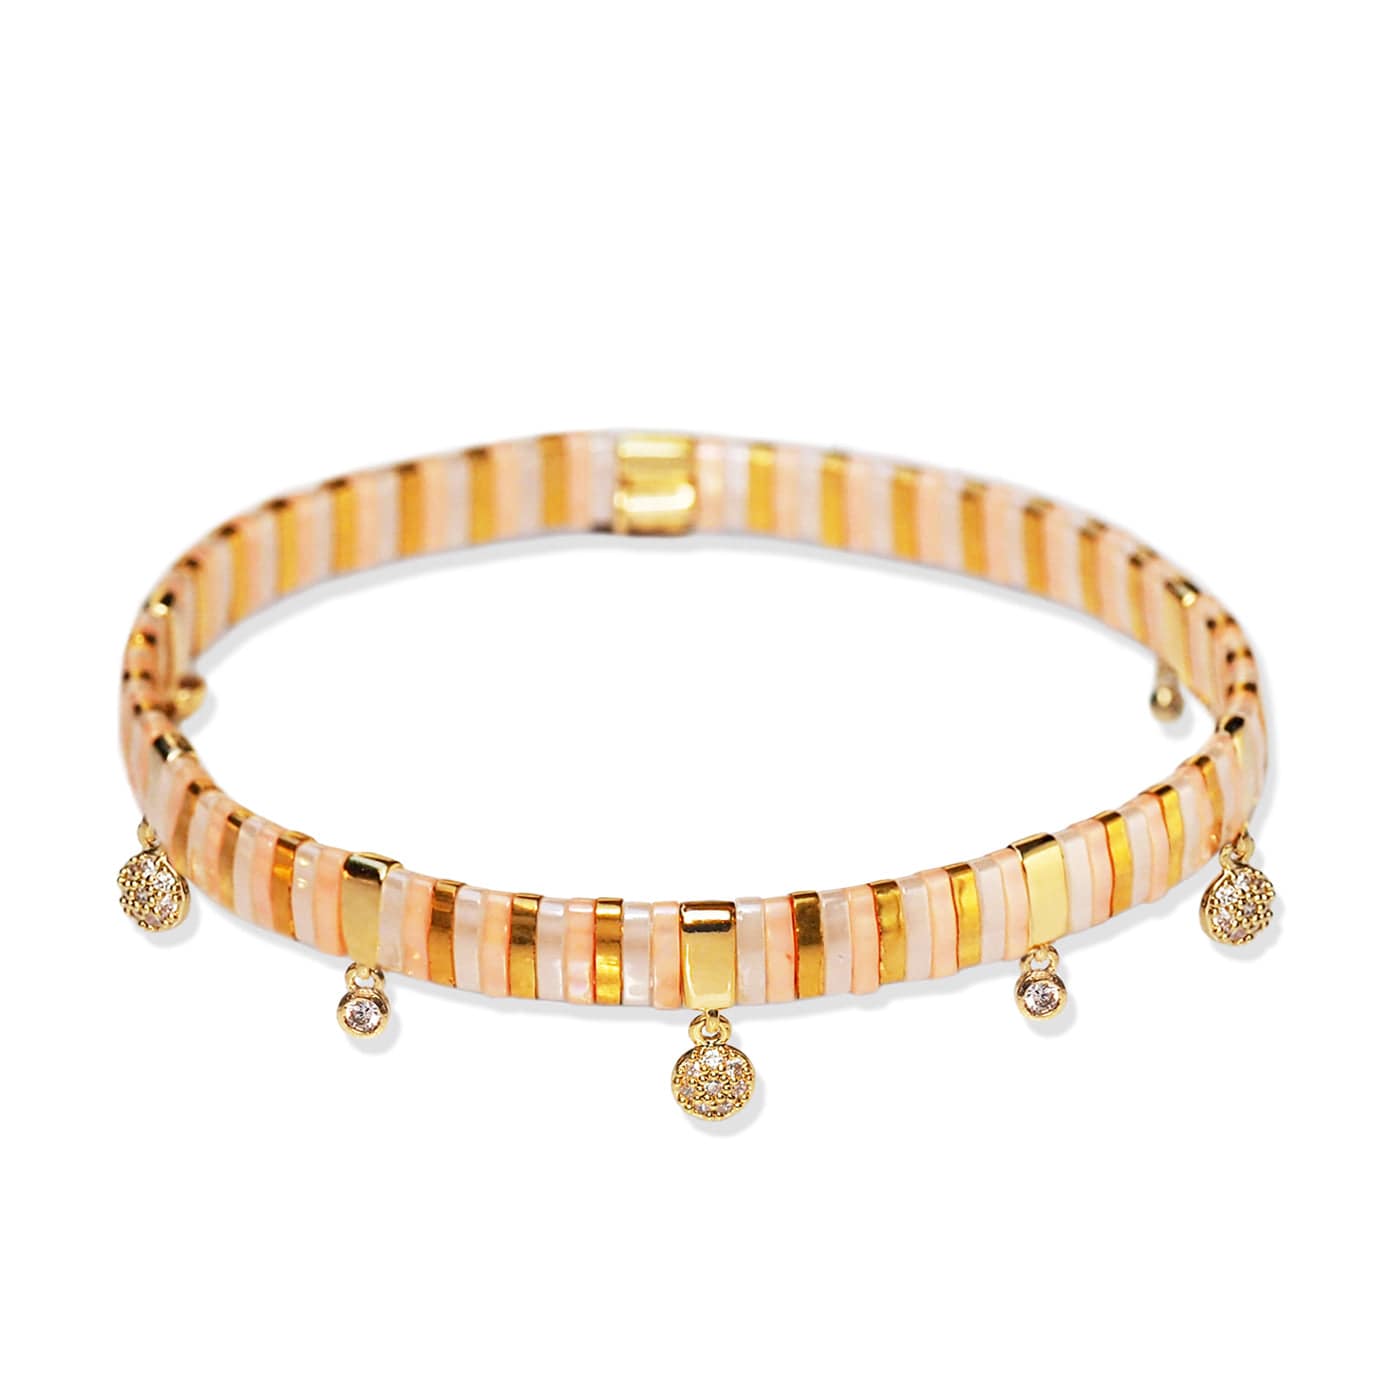 TAI JEWELRY Bracelet -1 Handmade Gold Tila Bead Bracelet With Charms